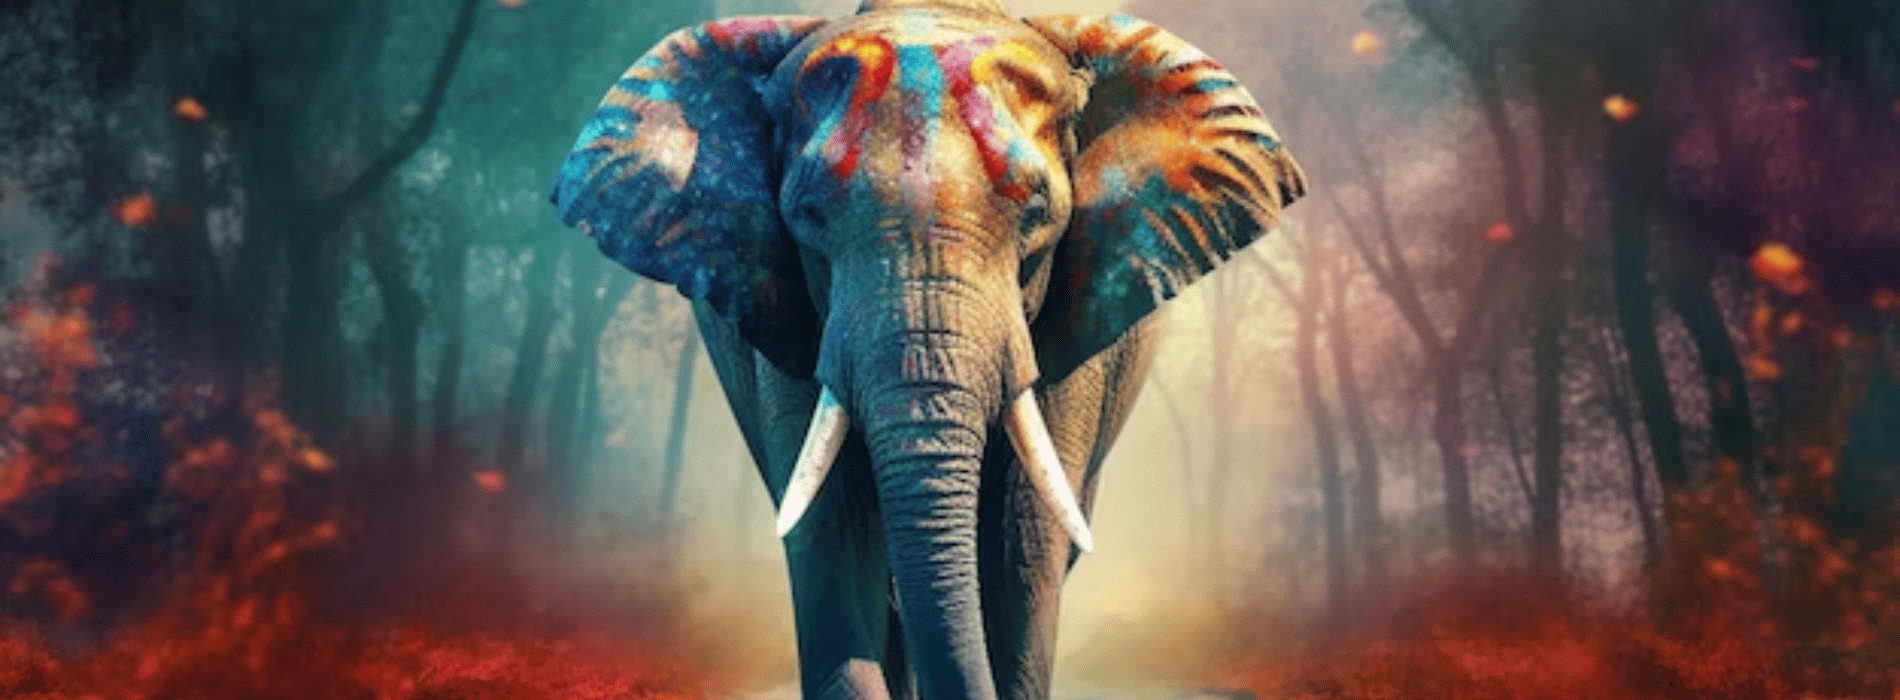 Elefant Tier der Macht